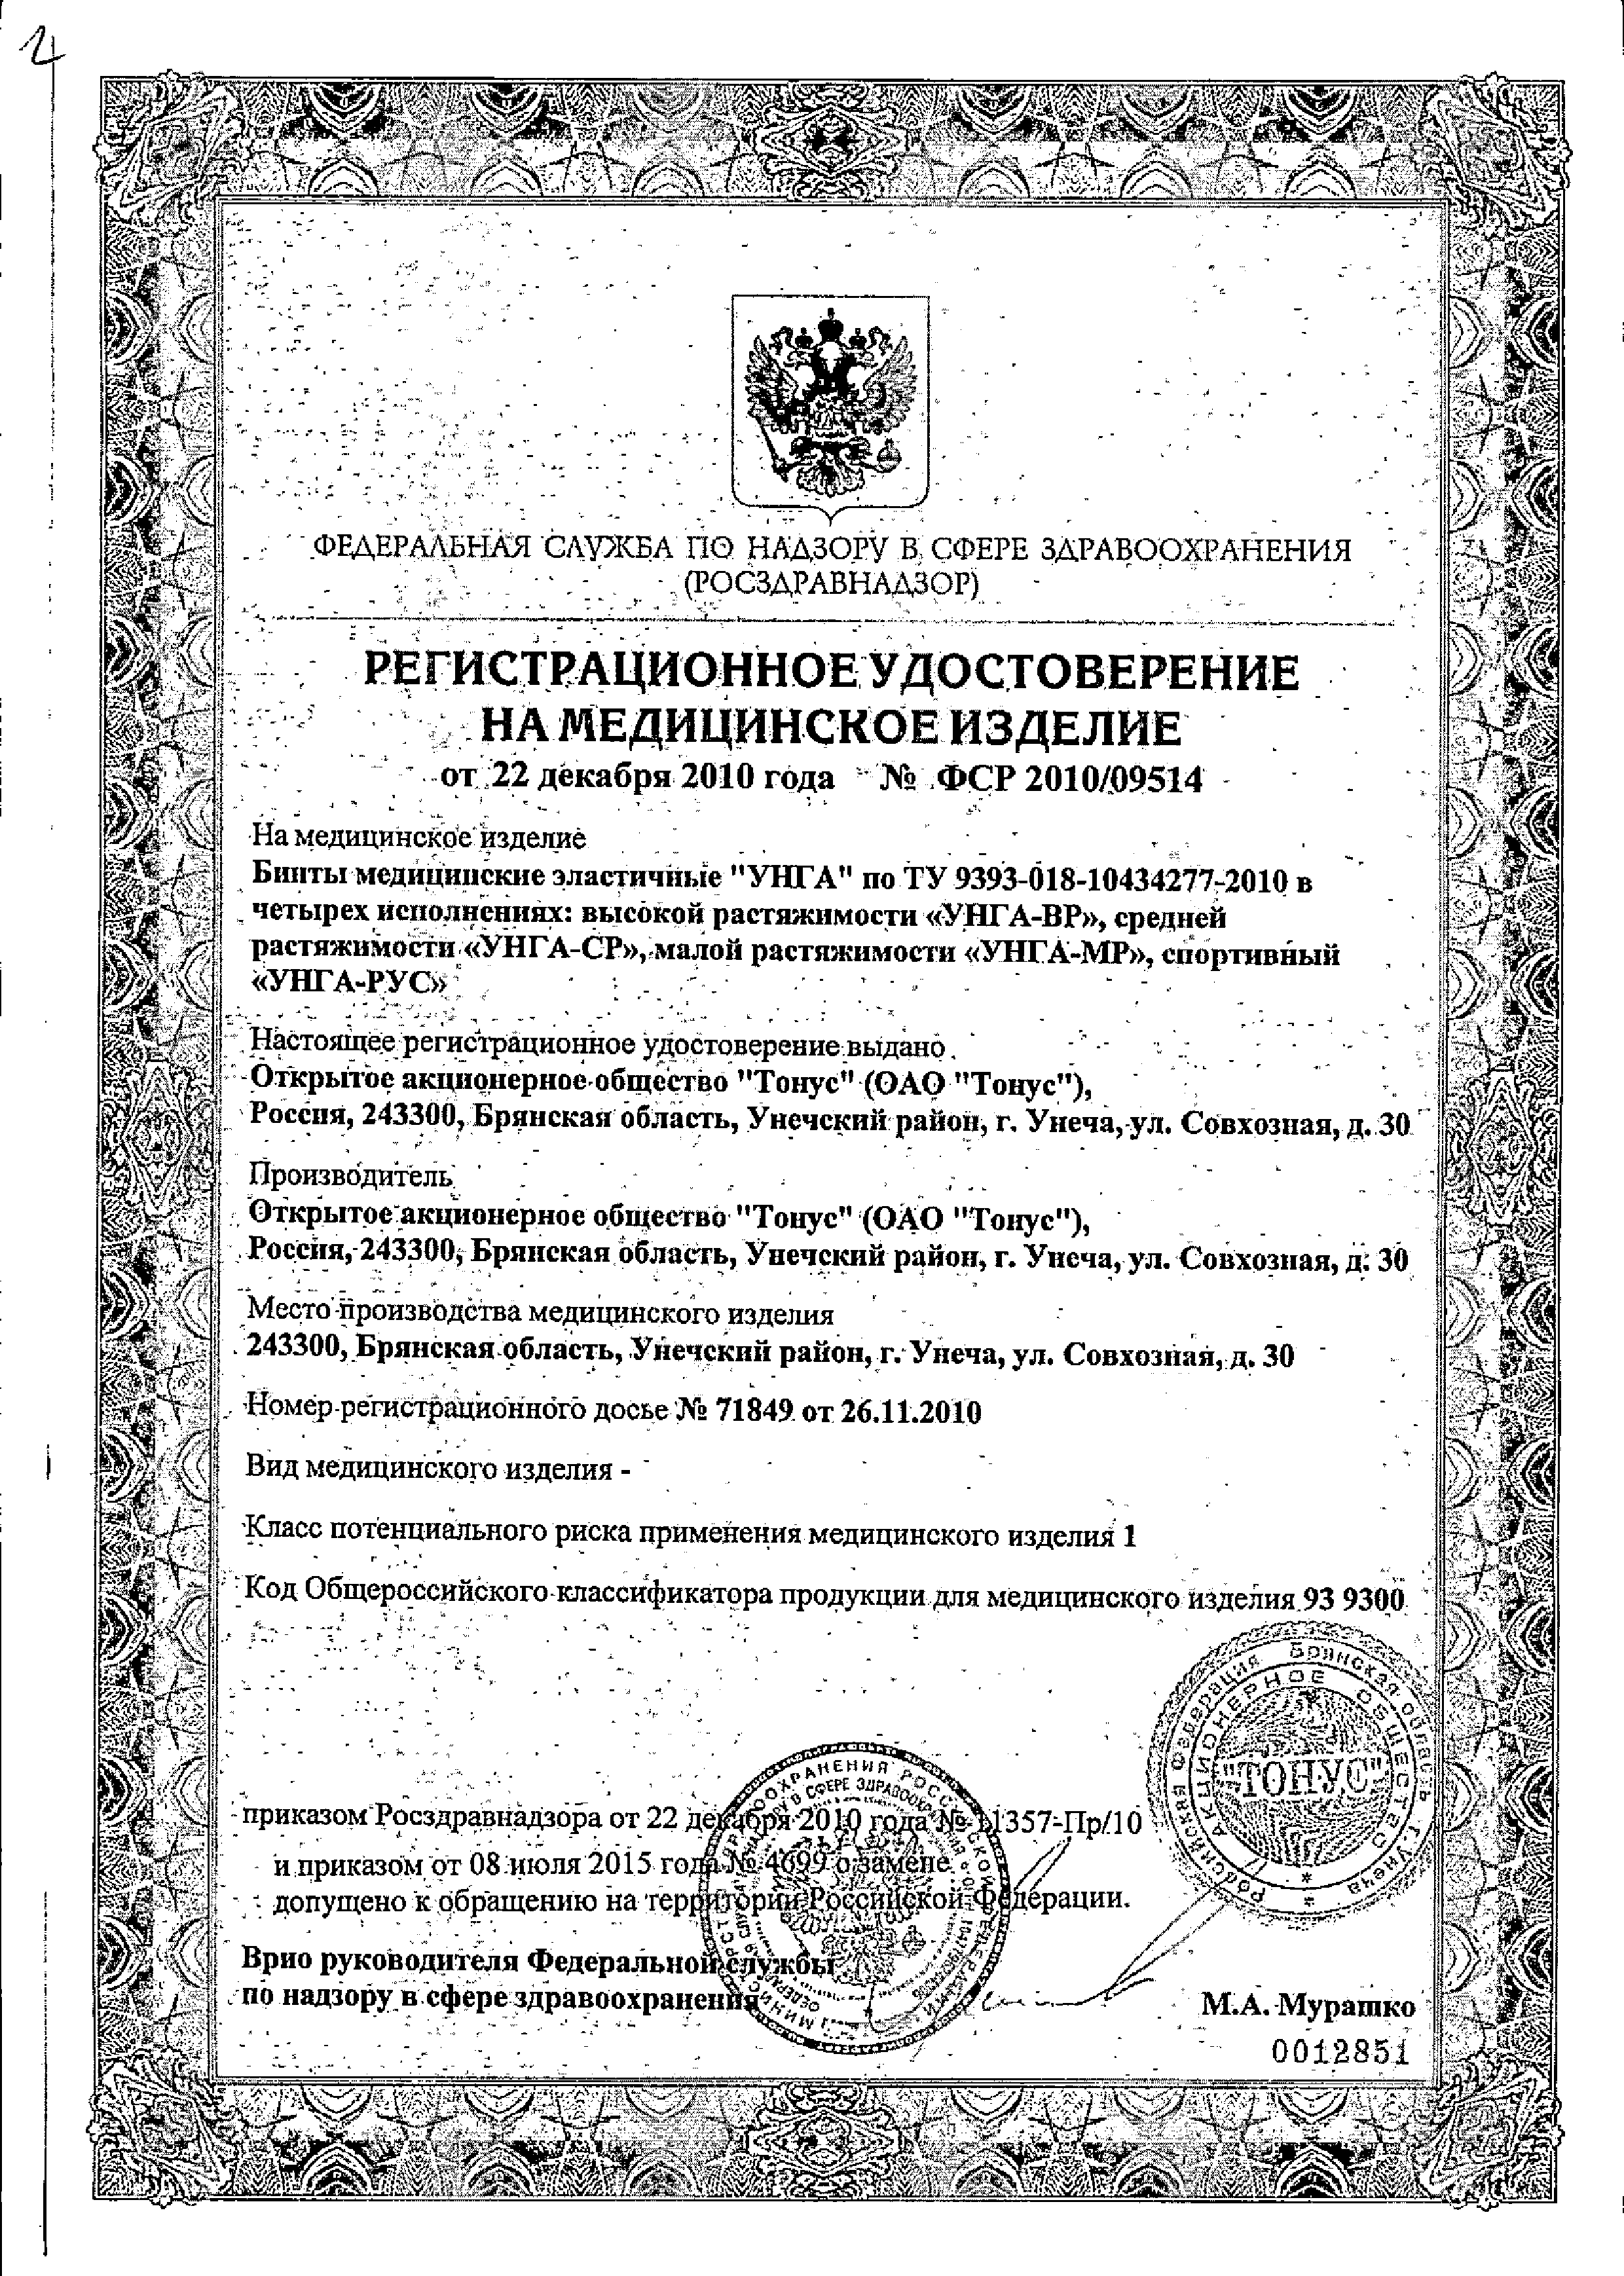 Бинт медицинский эластичный УНГА-ВР сертификат